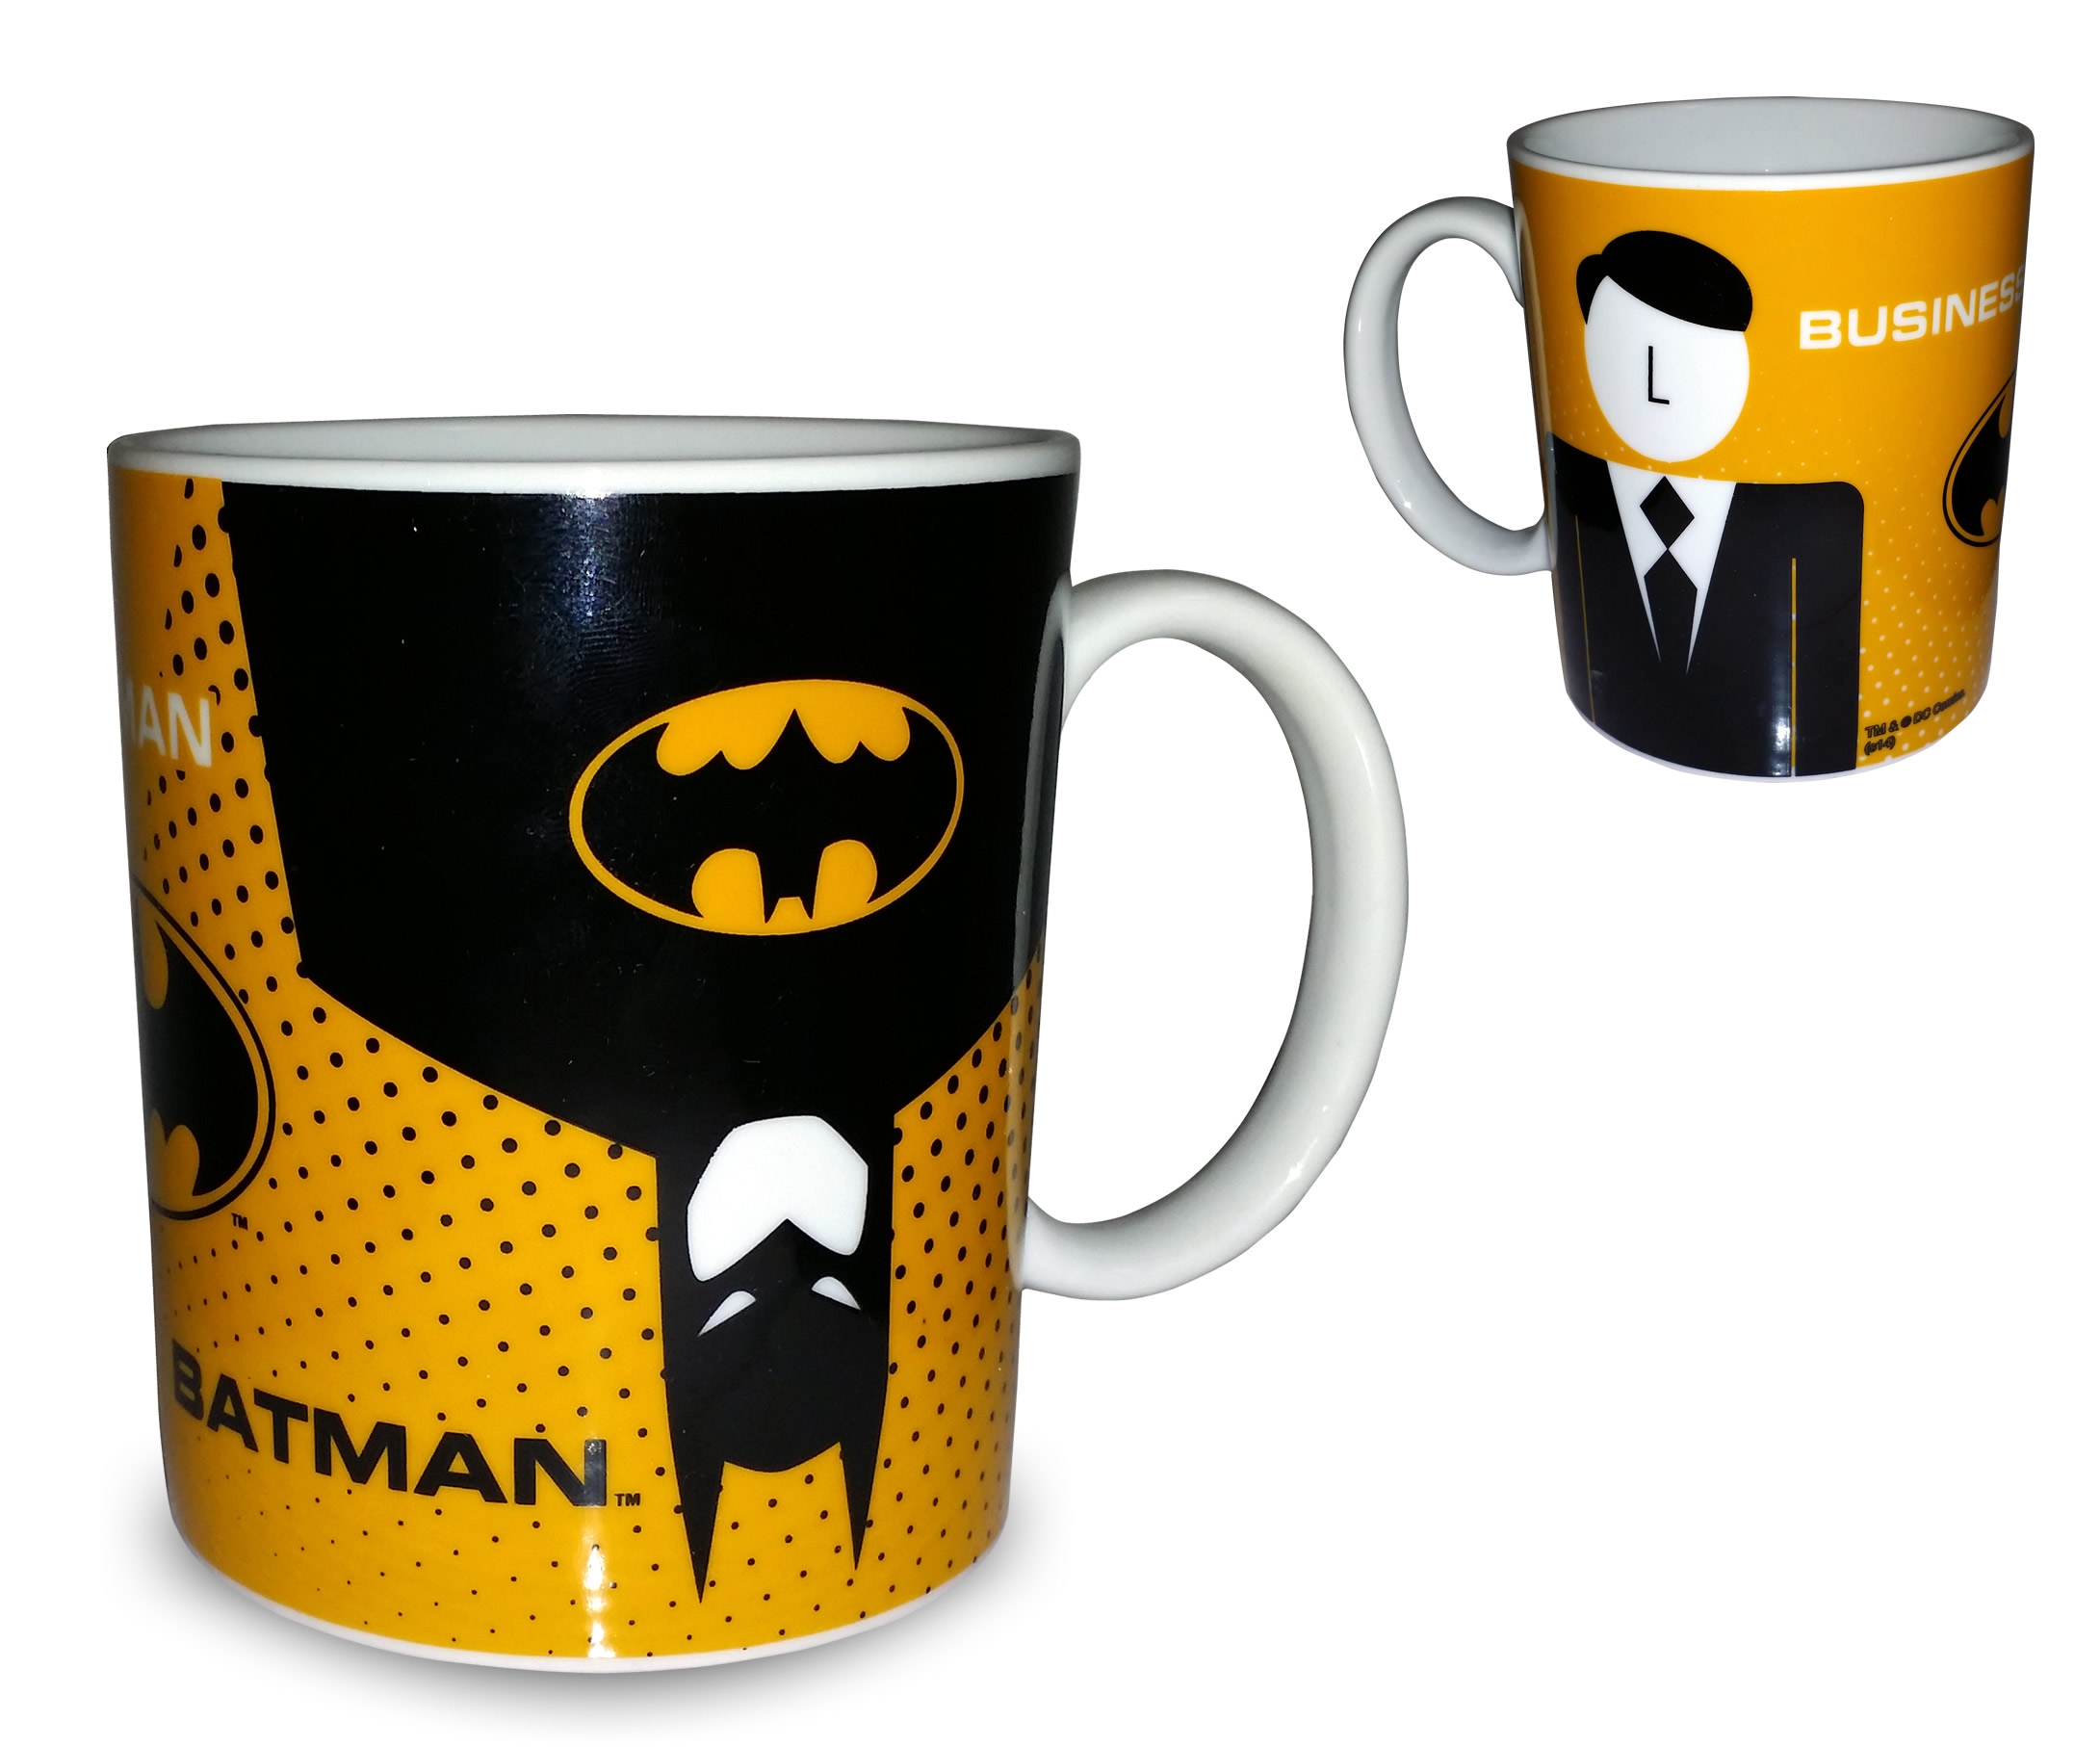 Batman 'Businessman' Mug